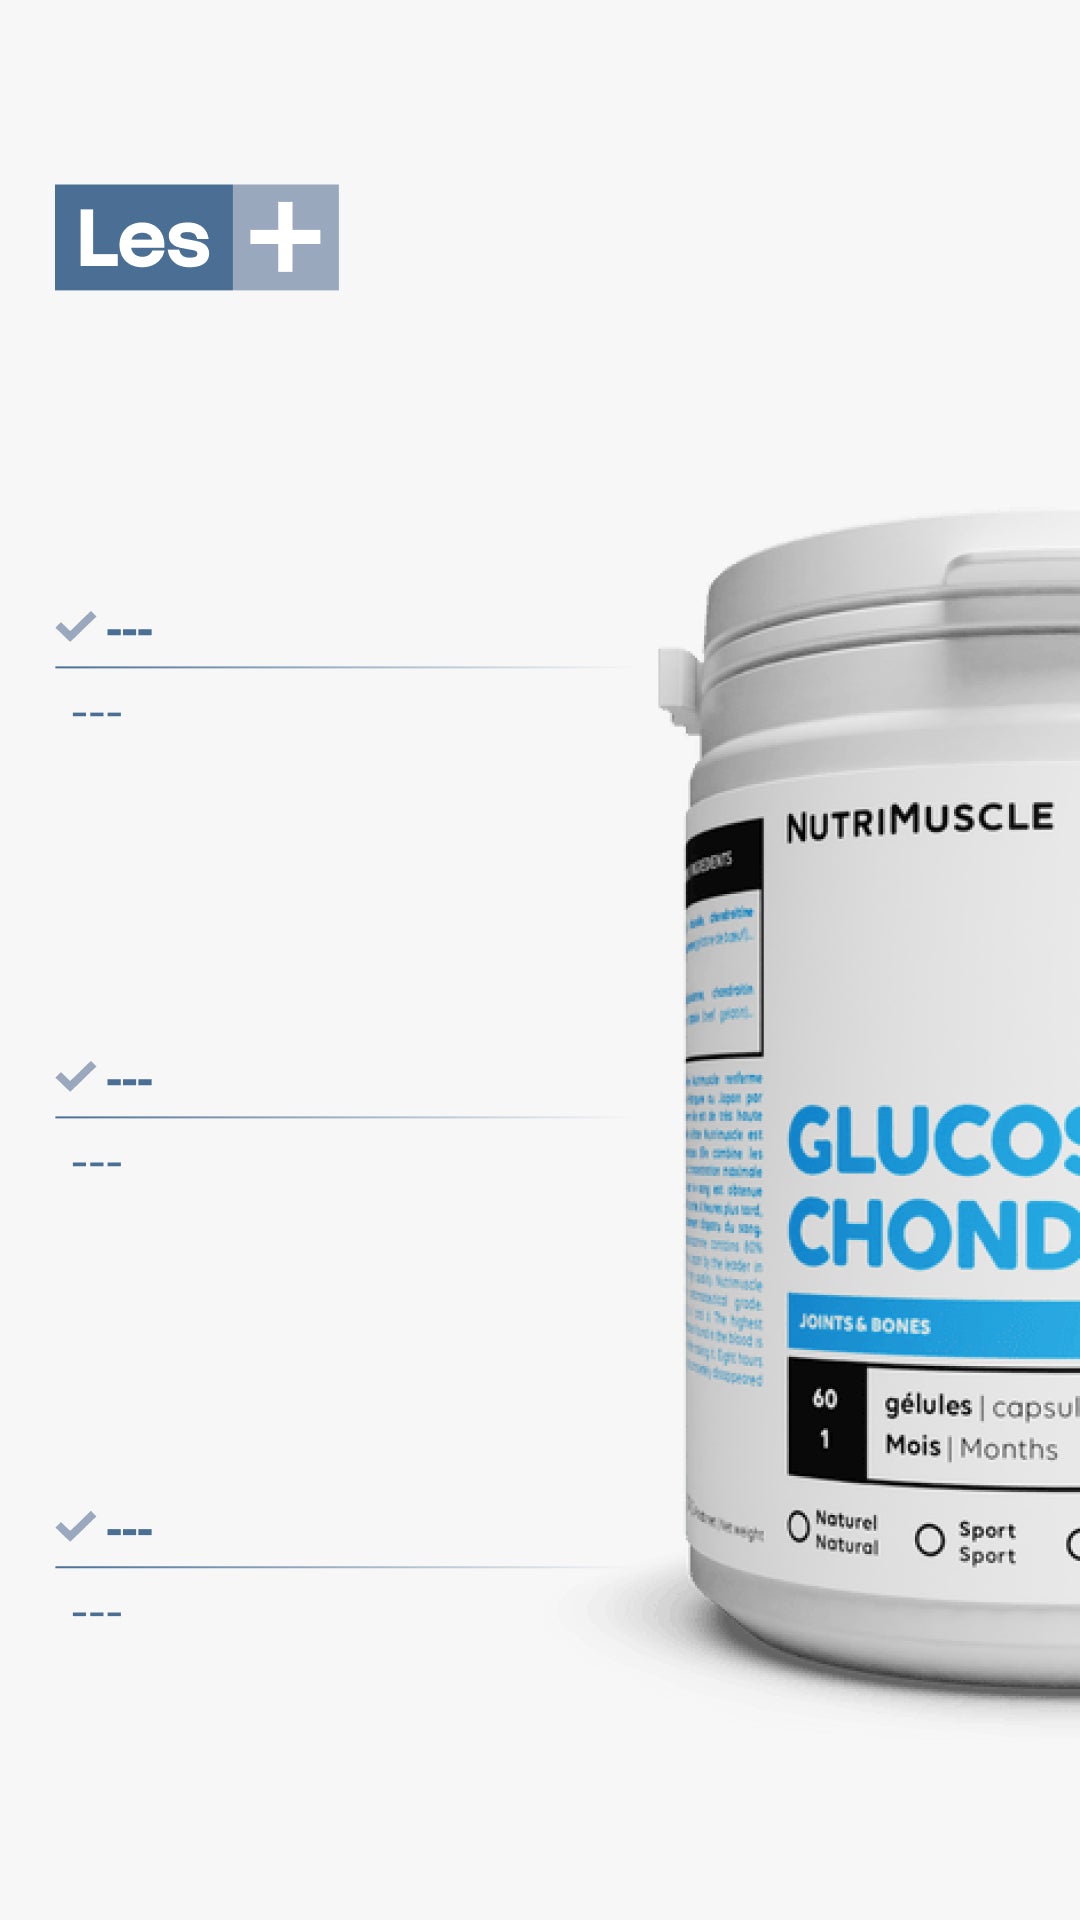 Mix glucosamine + chondroitine in capsules